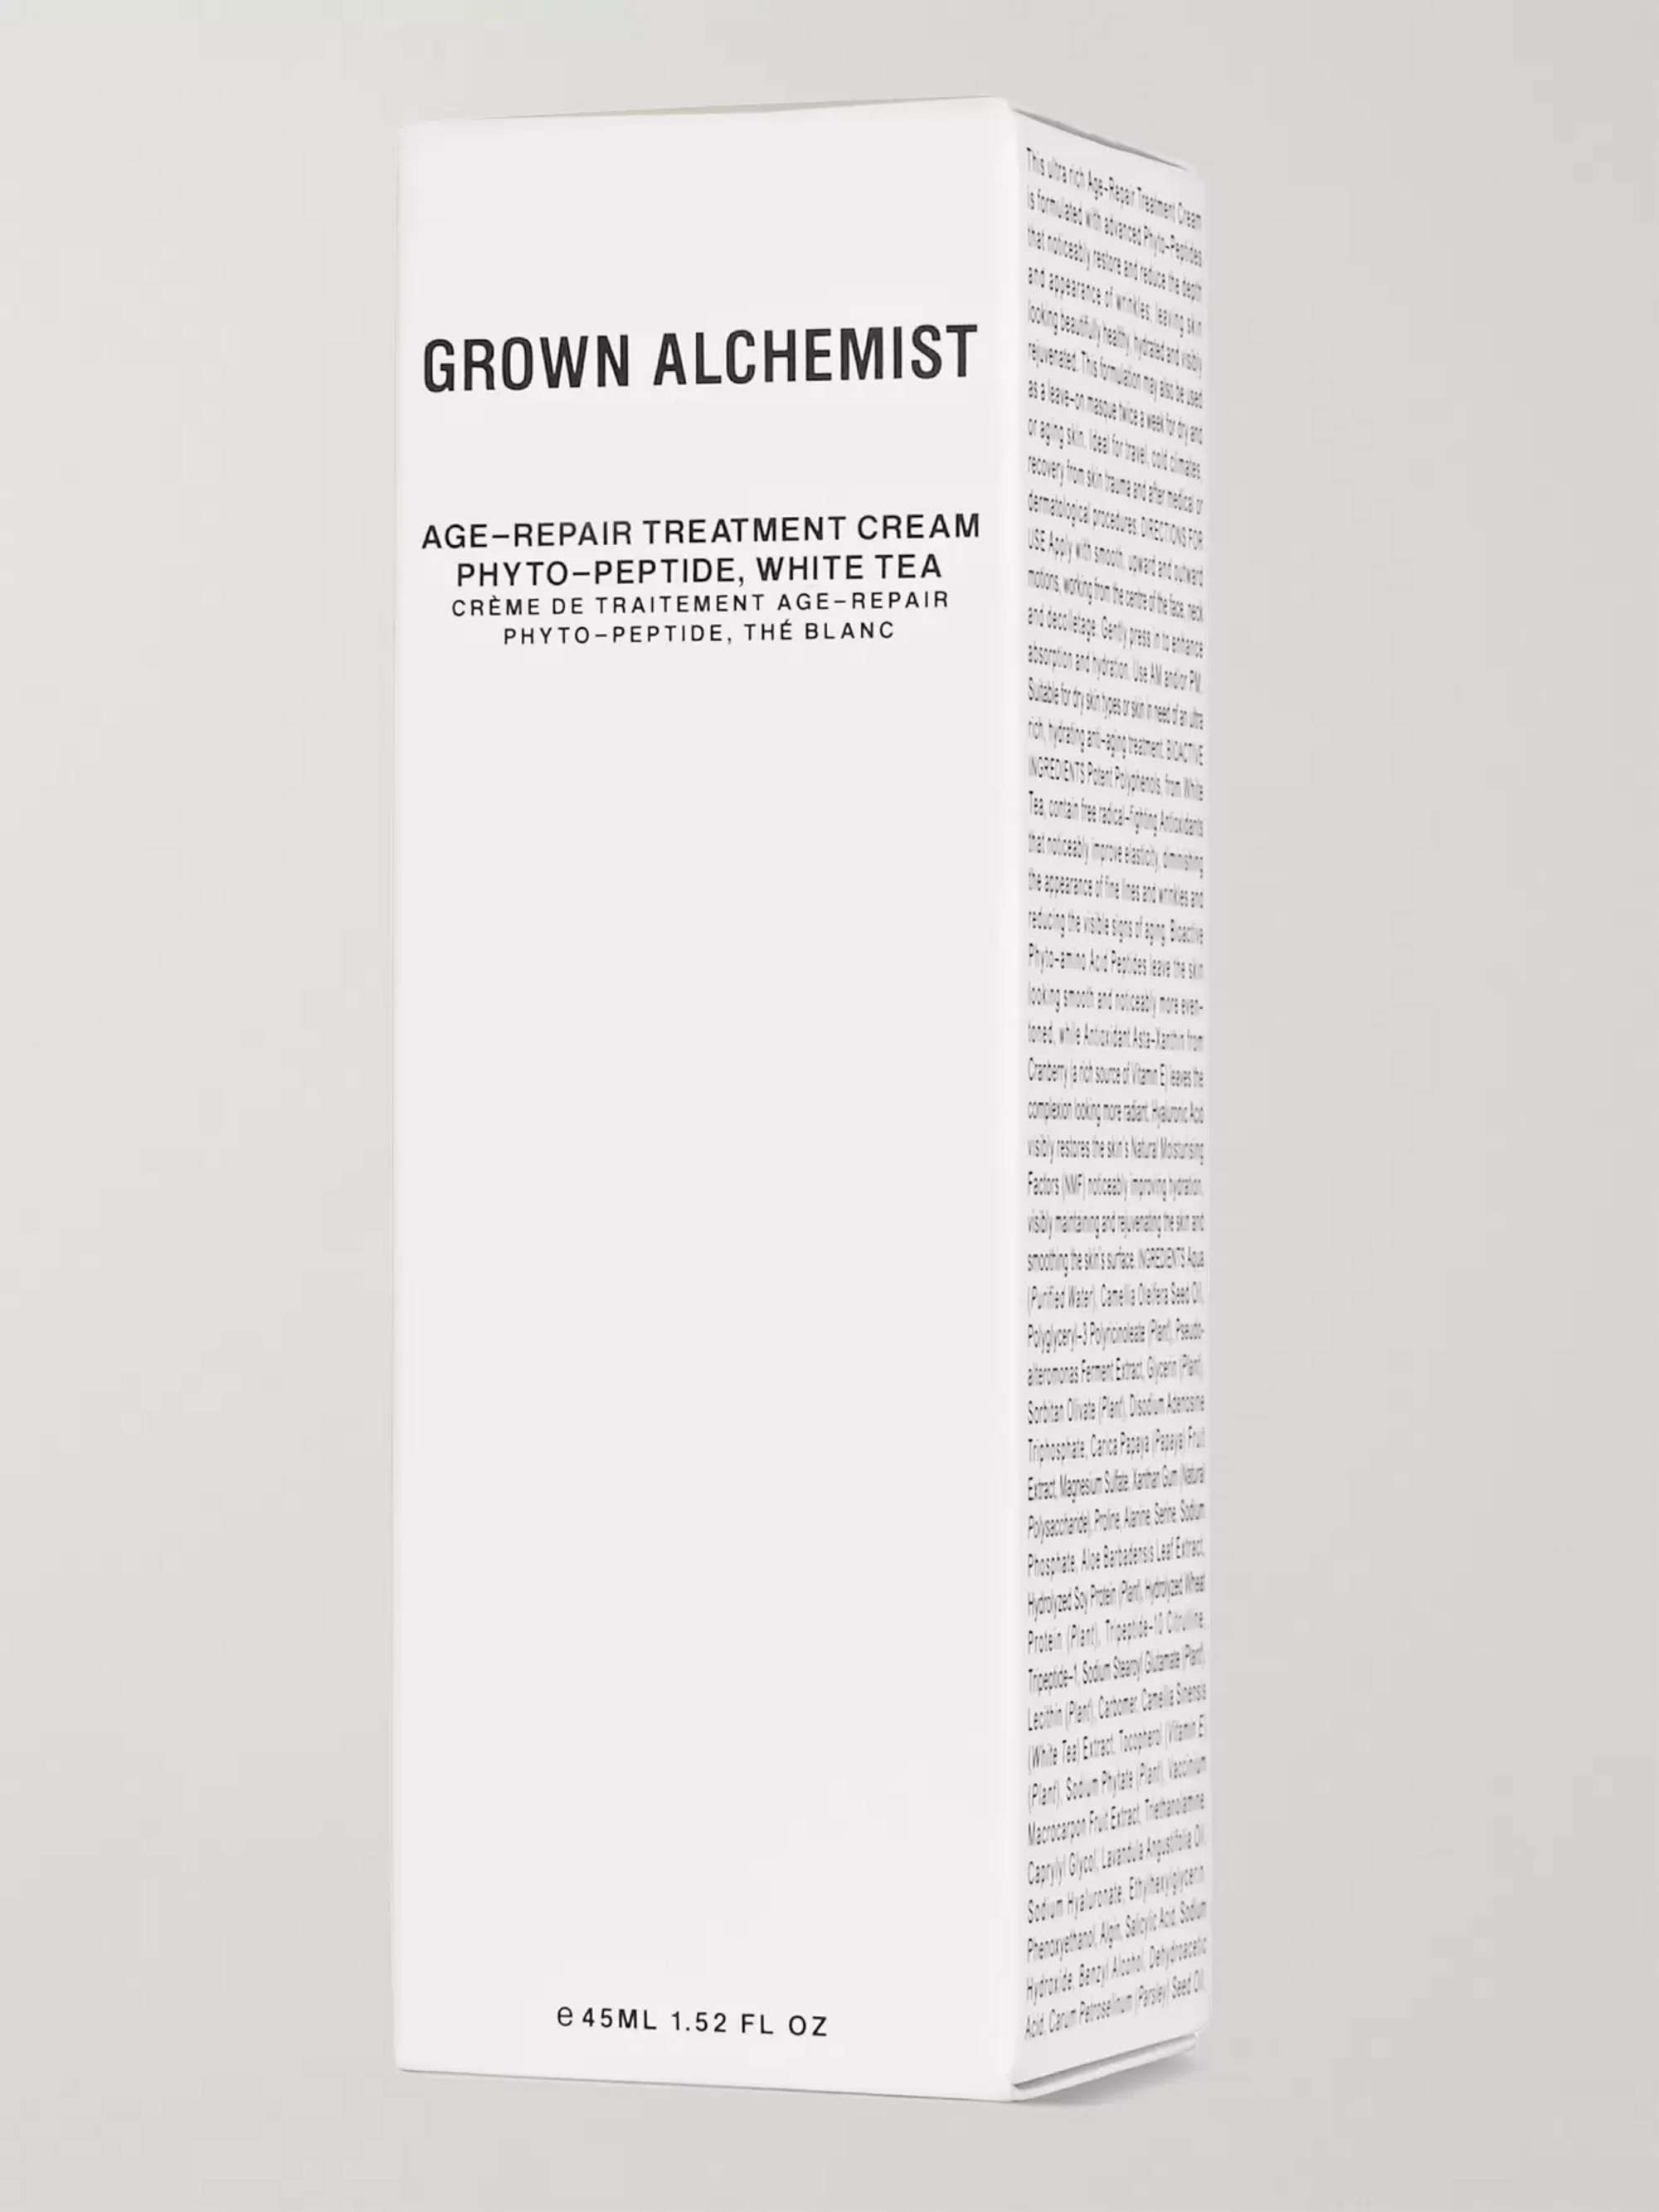 GROWN ALCHEMIST Age-Repair Treatment Cream - Phyto-Peptide & White Tea Extract, 45ml